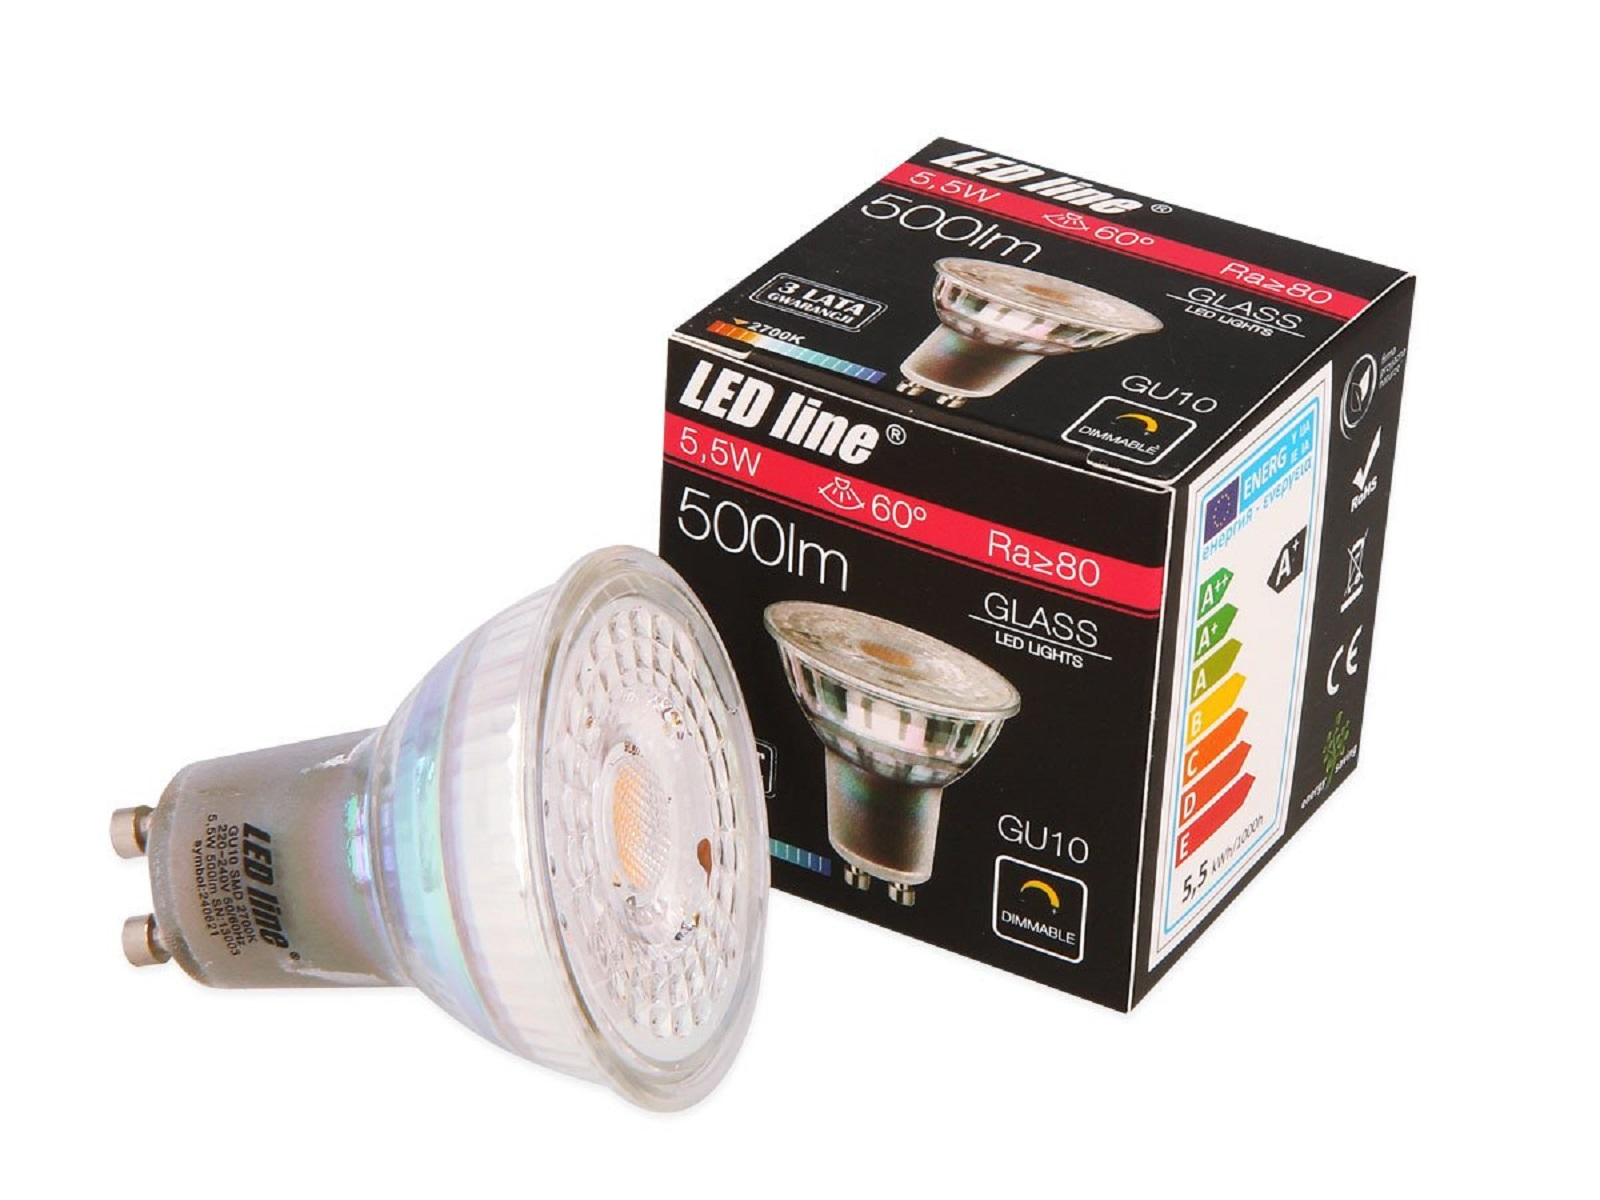 LED LINE GU10 Leuchtmittel GU10 500 LED 3x Warmweiß Lumen Strahler 5,5W Spot